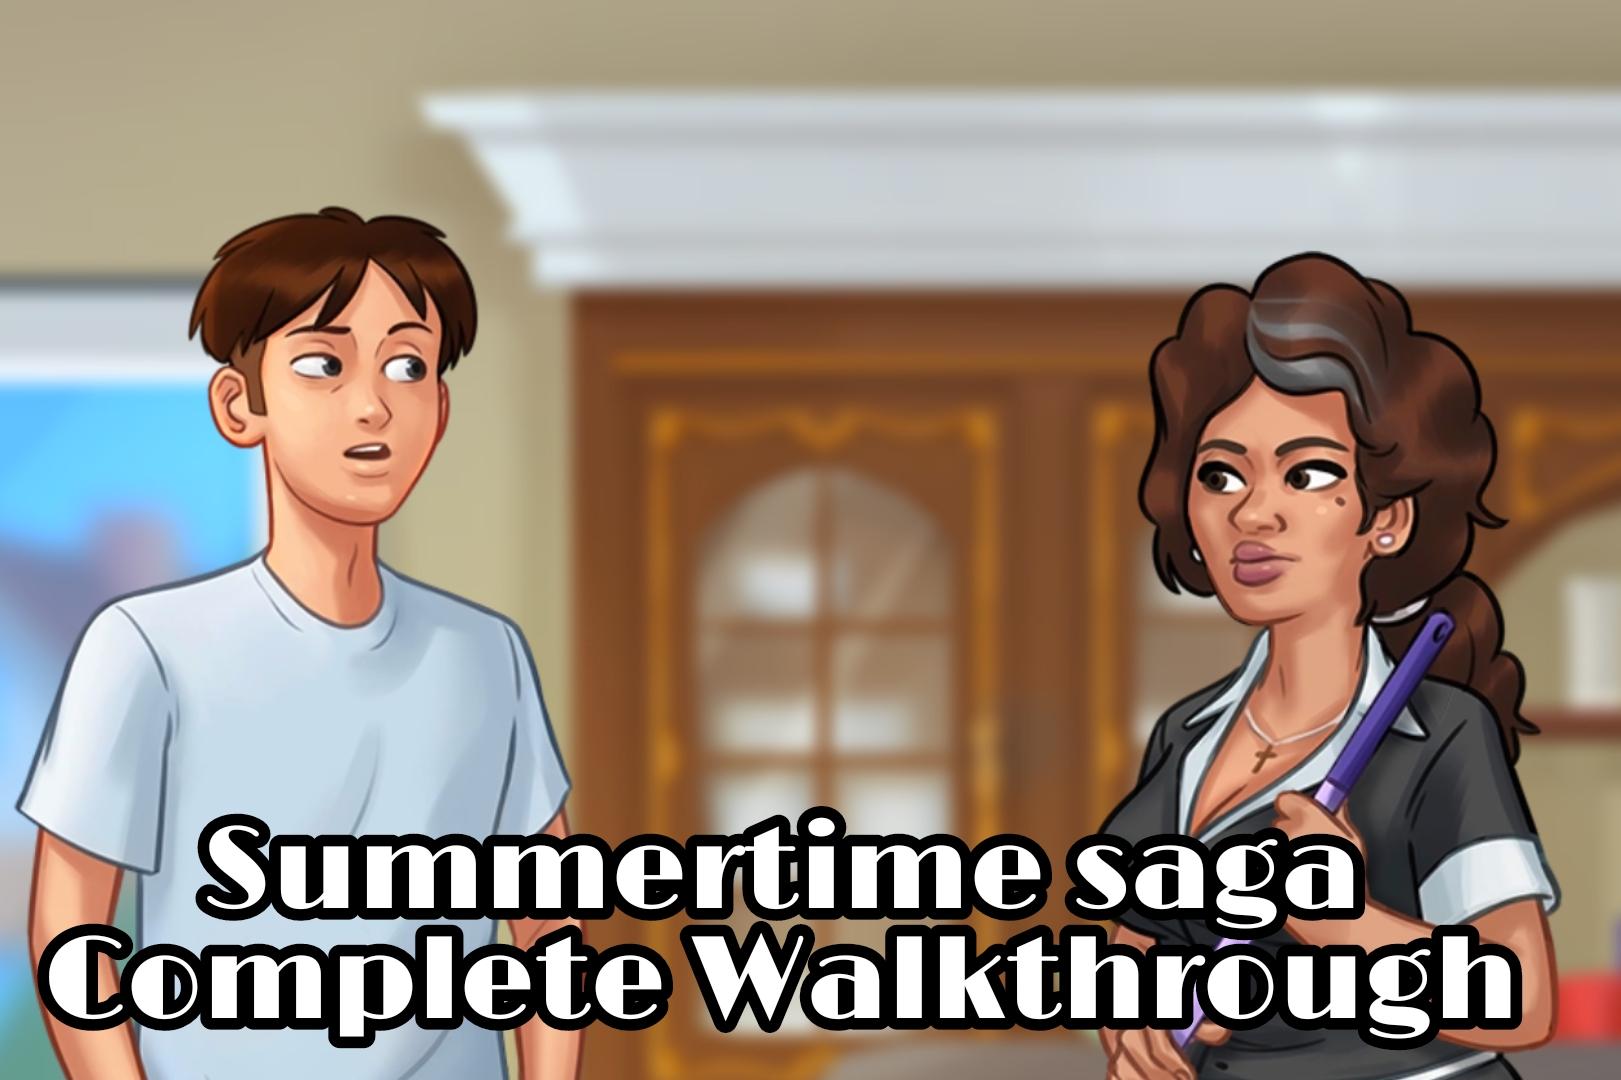 Download Walkthrough - summertime saga android on PC